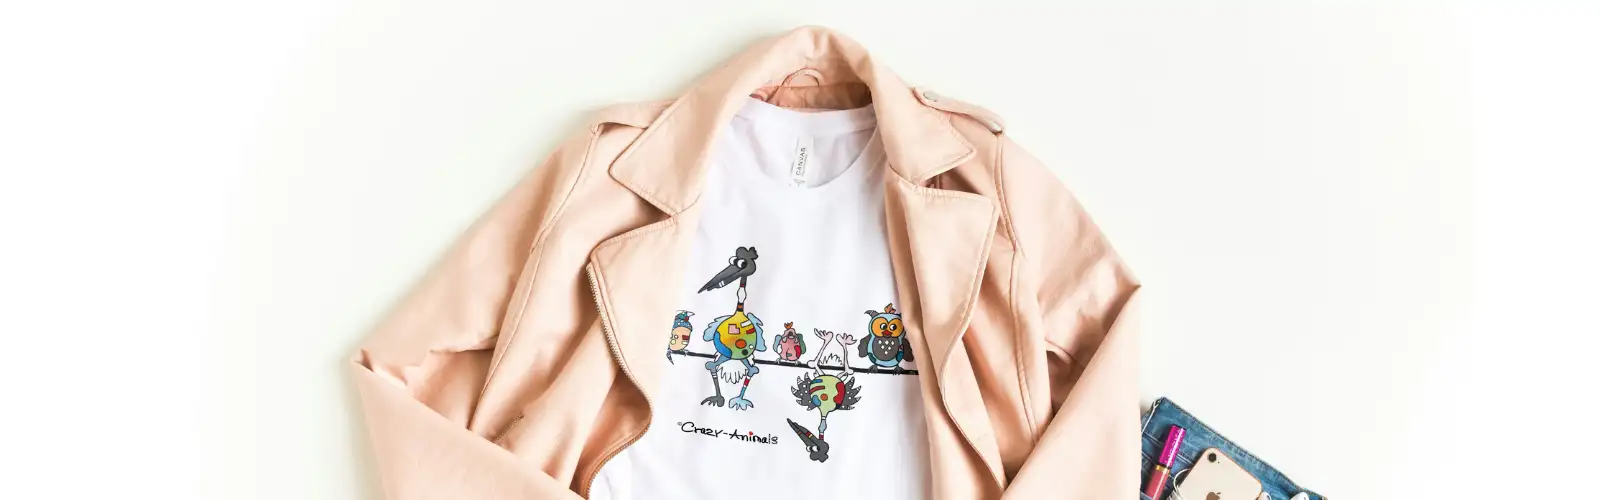 Lustiges T-Shirt aus der Crazy-Animals Kollektion, Vögelmotiv